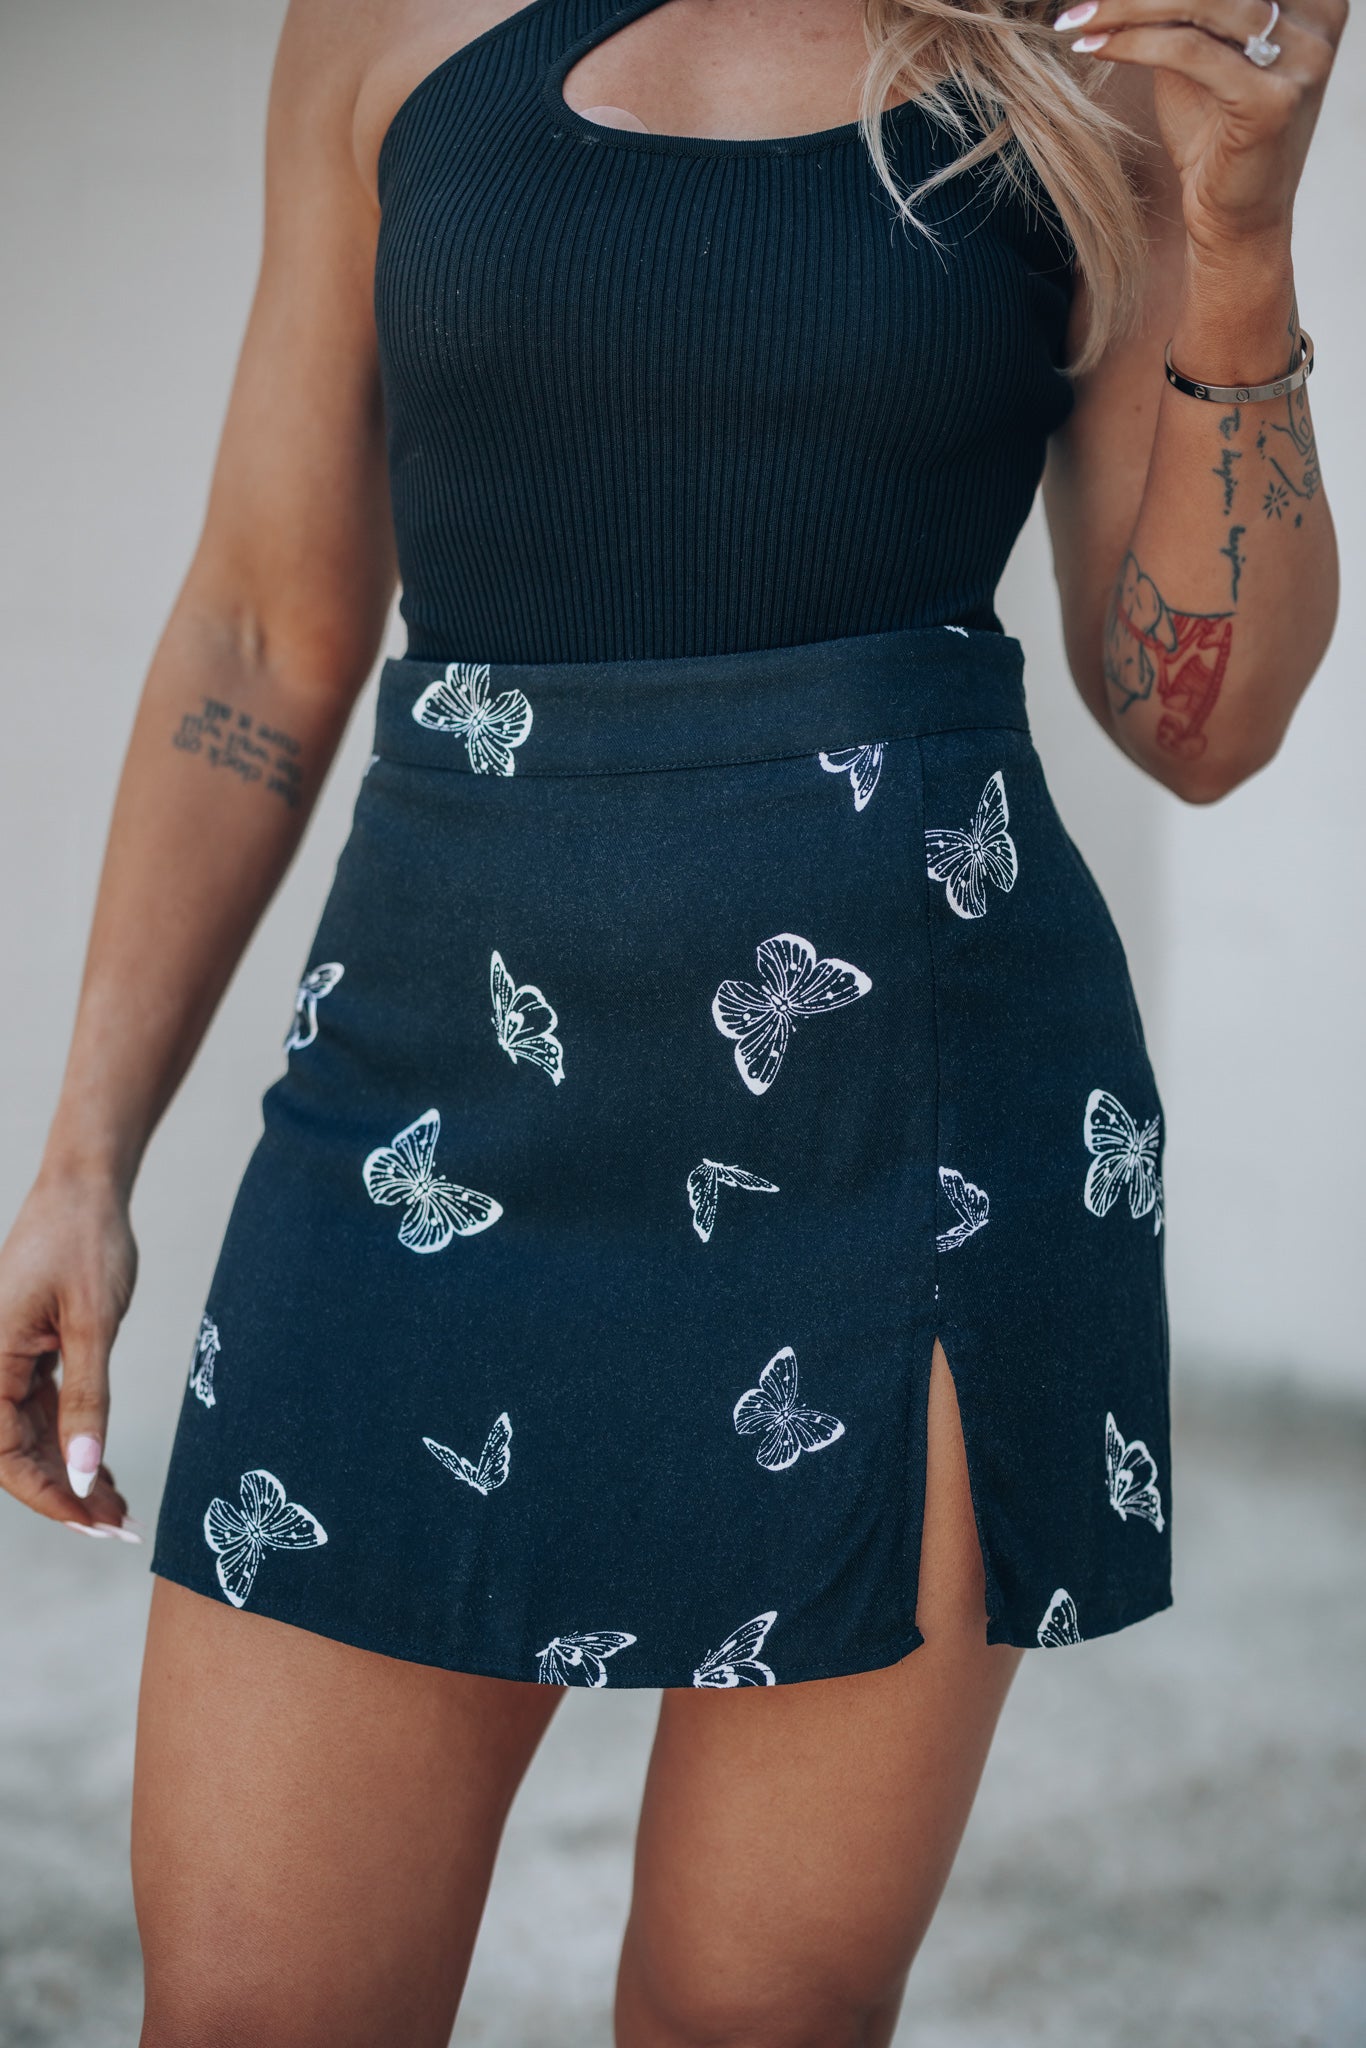 Fly Away Butterfly Mini Skirt